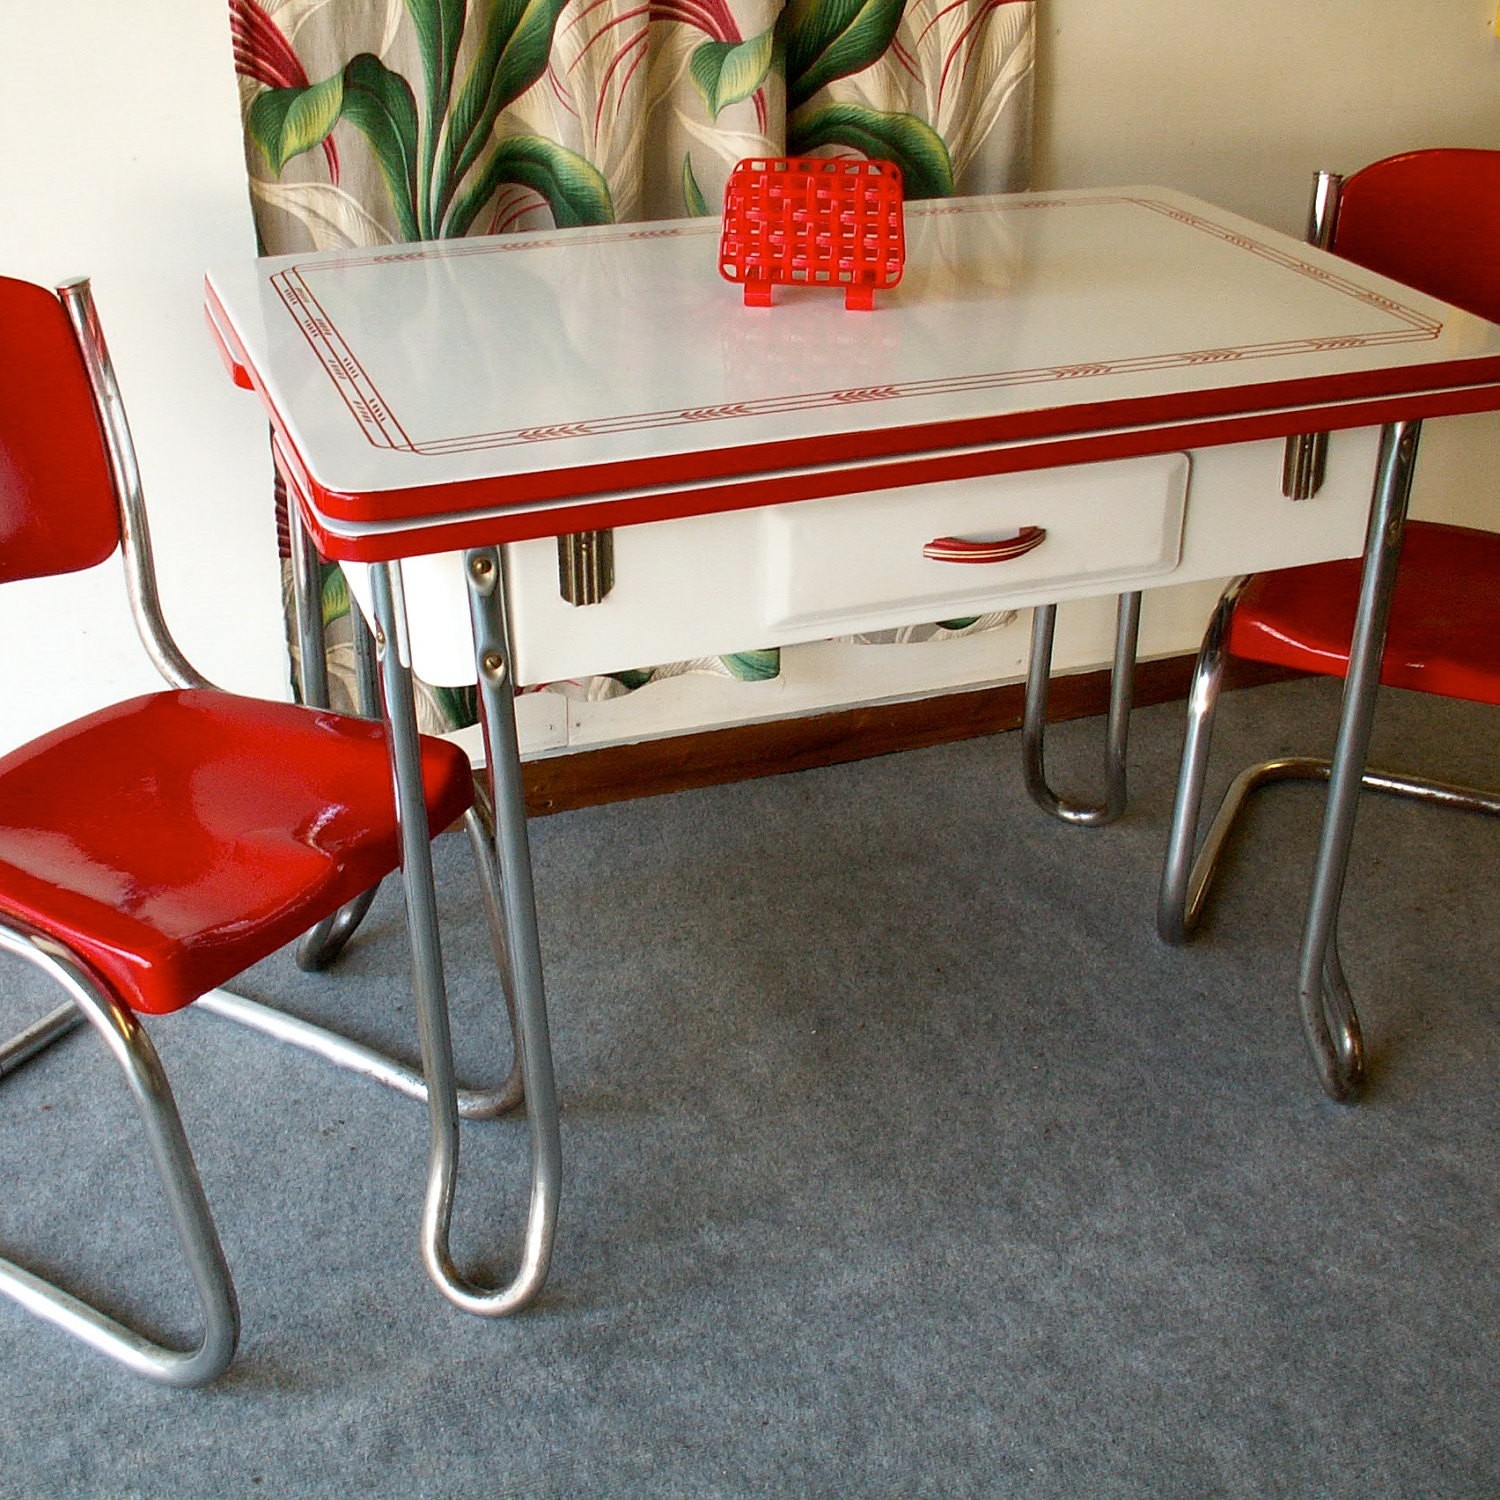  retro kitchen table for sale